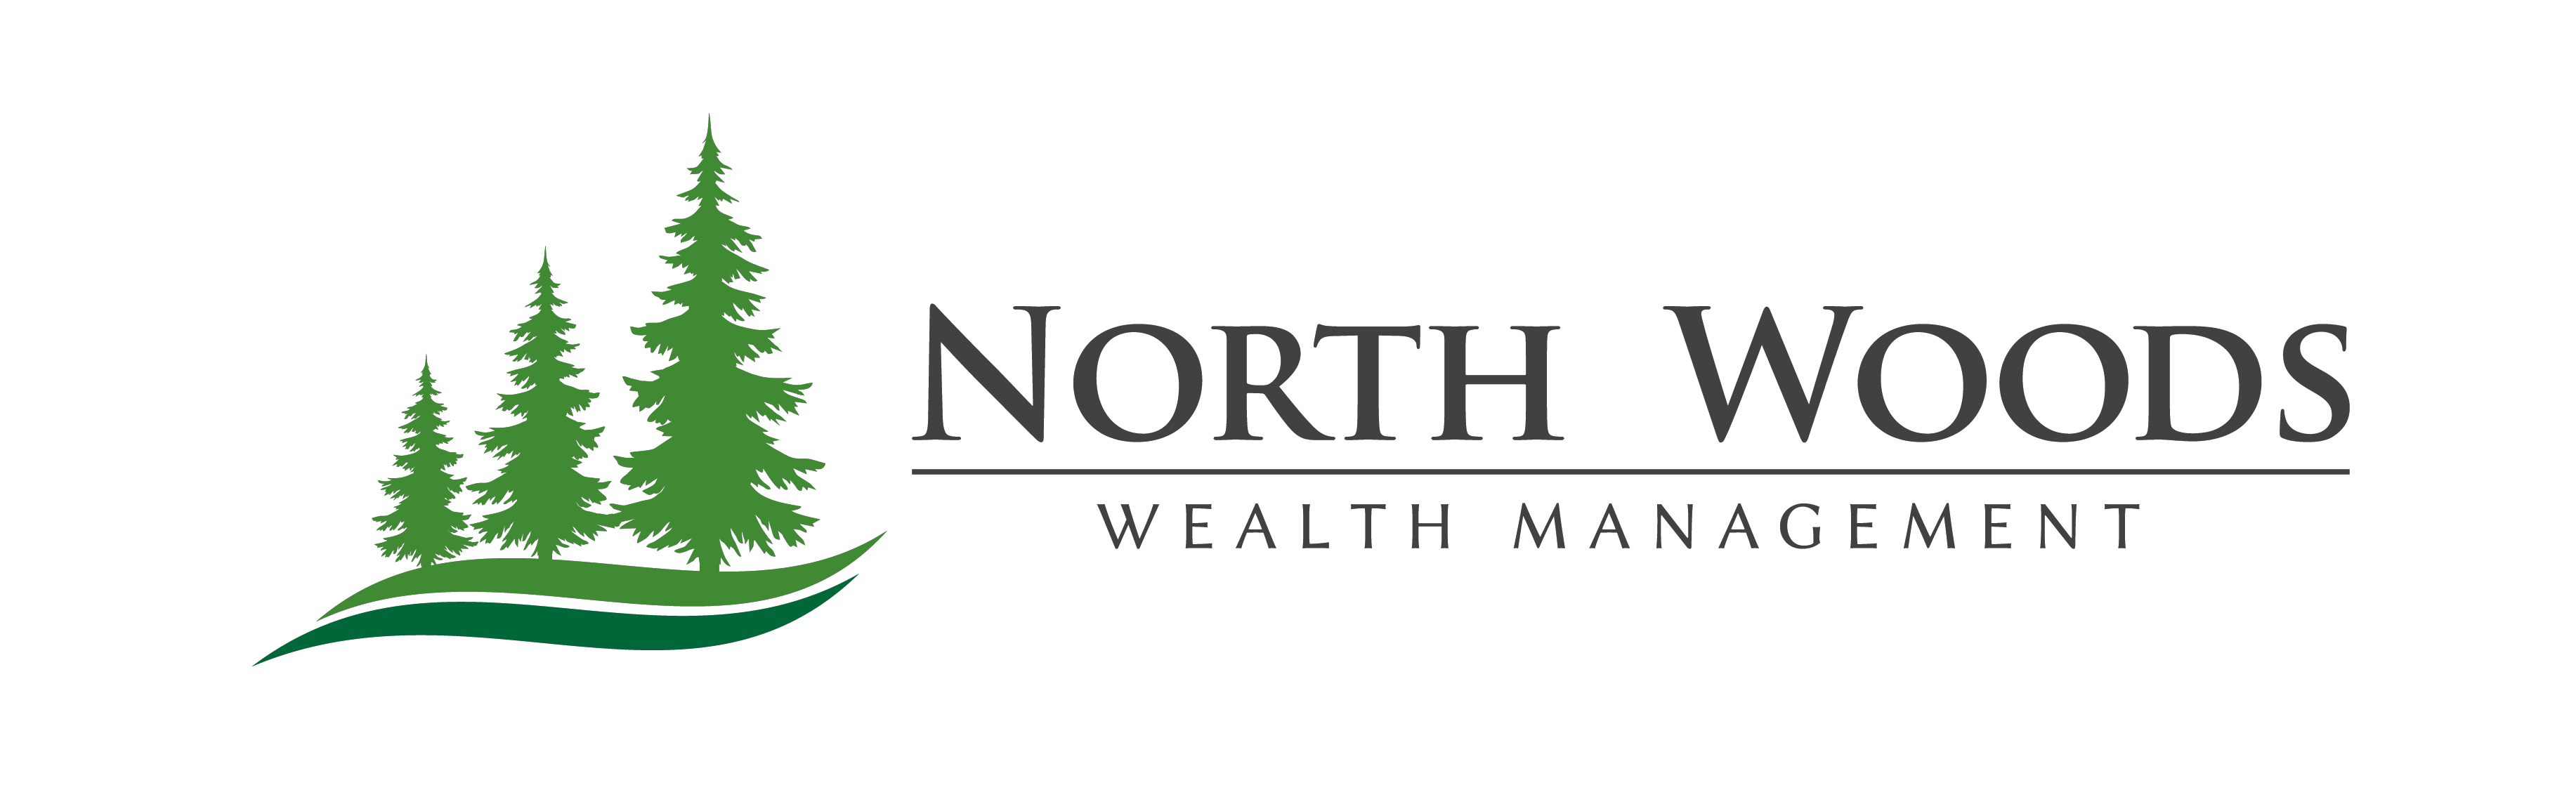 North Woods Wealth Management